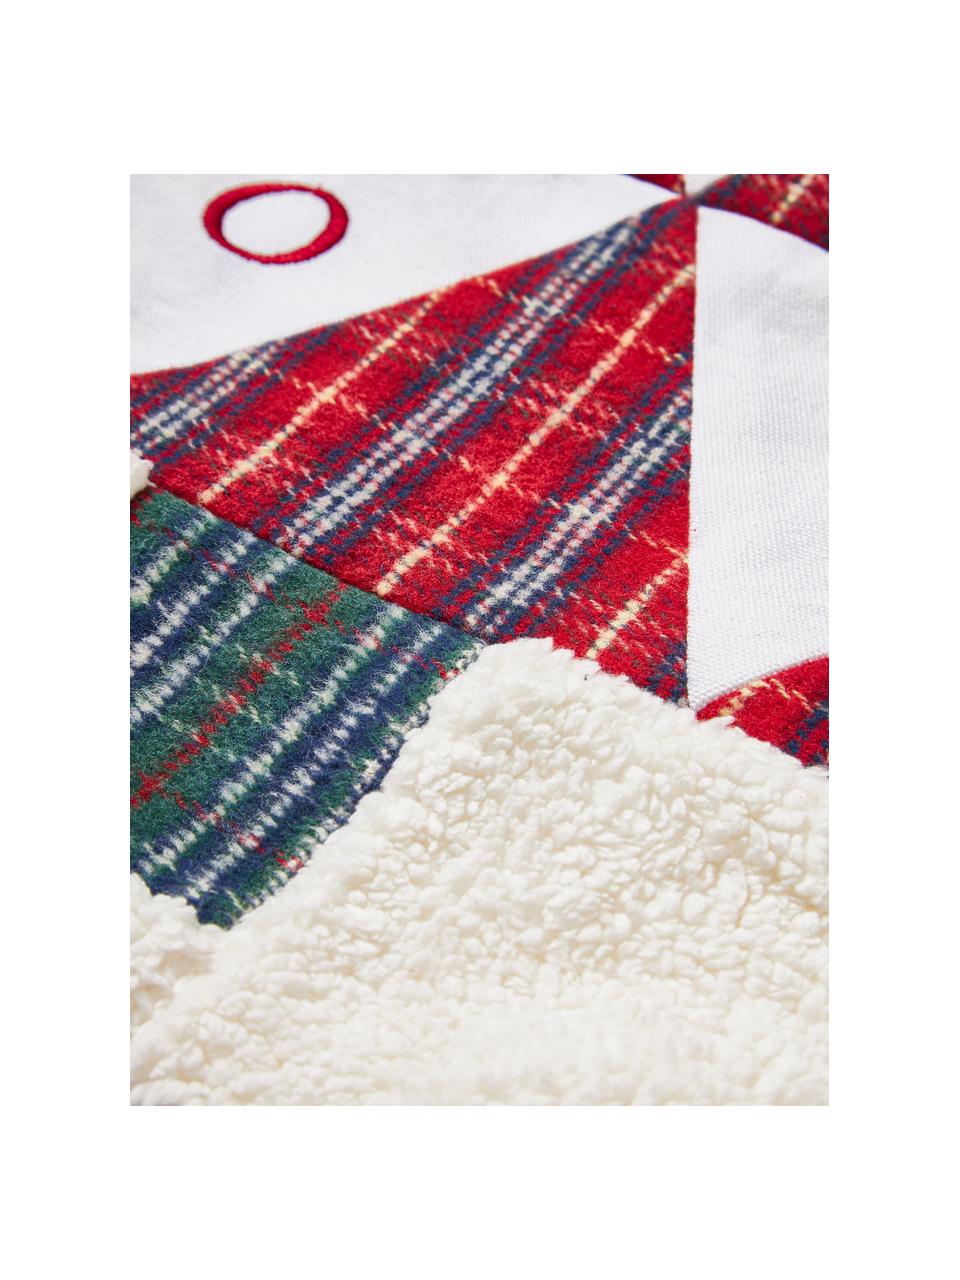 Federa arredo in tessuto teddy con motivo natalizio Elijah, Bianco crema, rosso, Larg. 45 x Lung. 45 cm